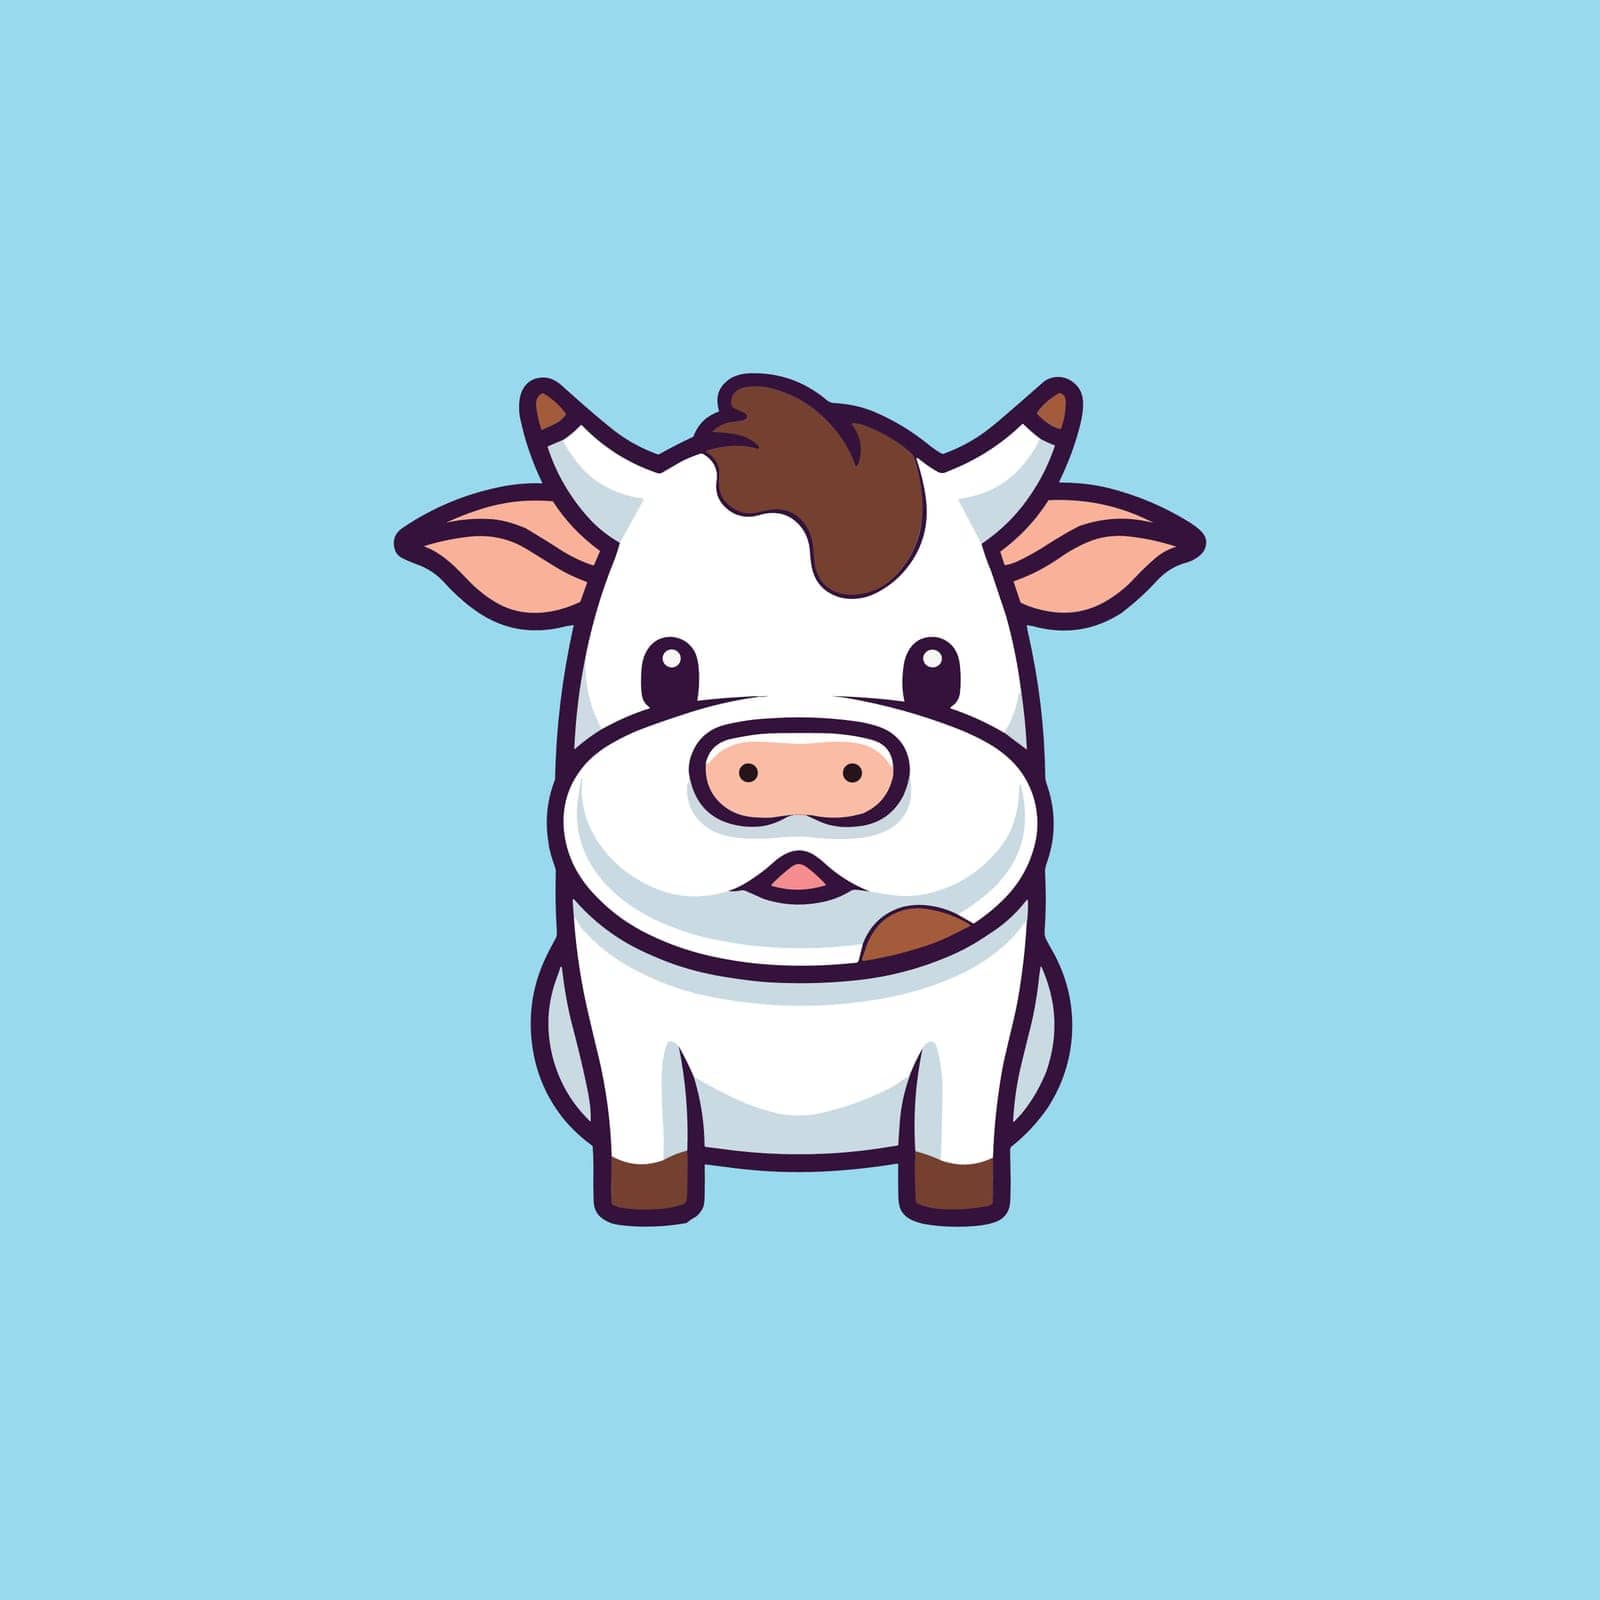 Cute cow mascot illustration cartoon